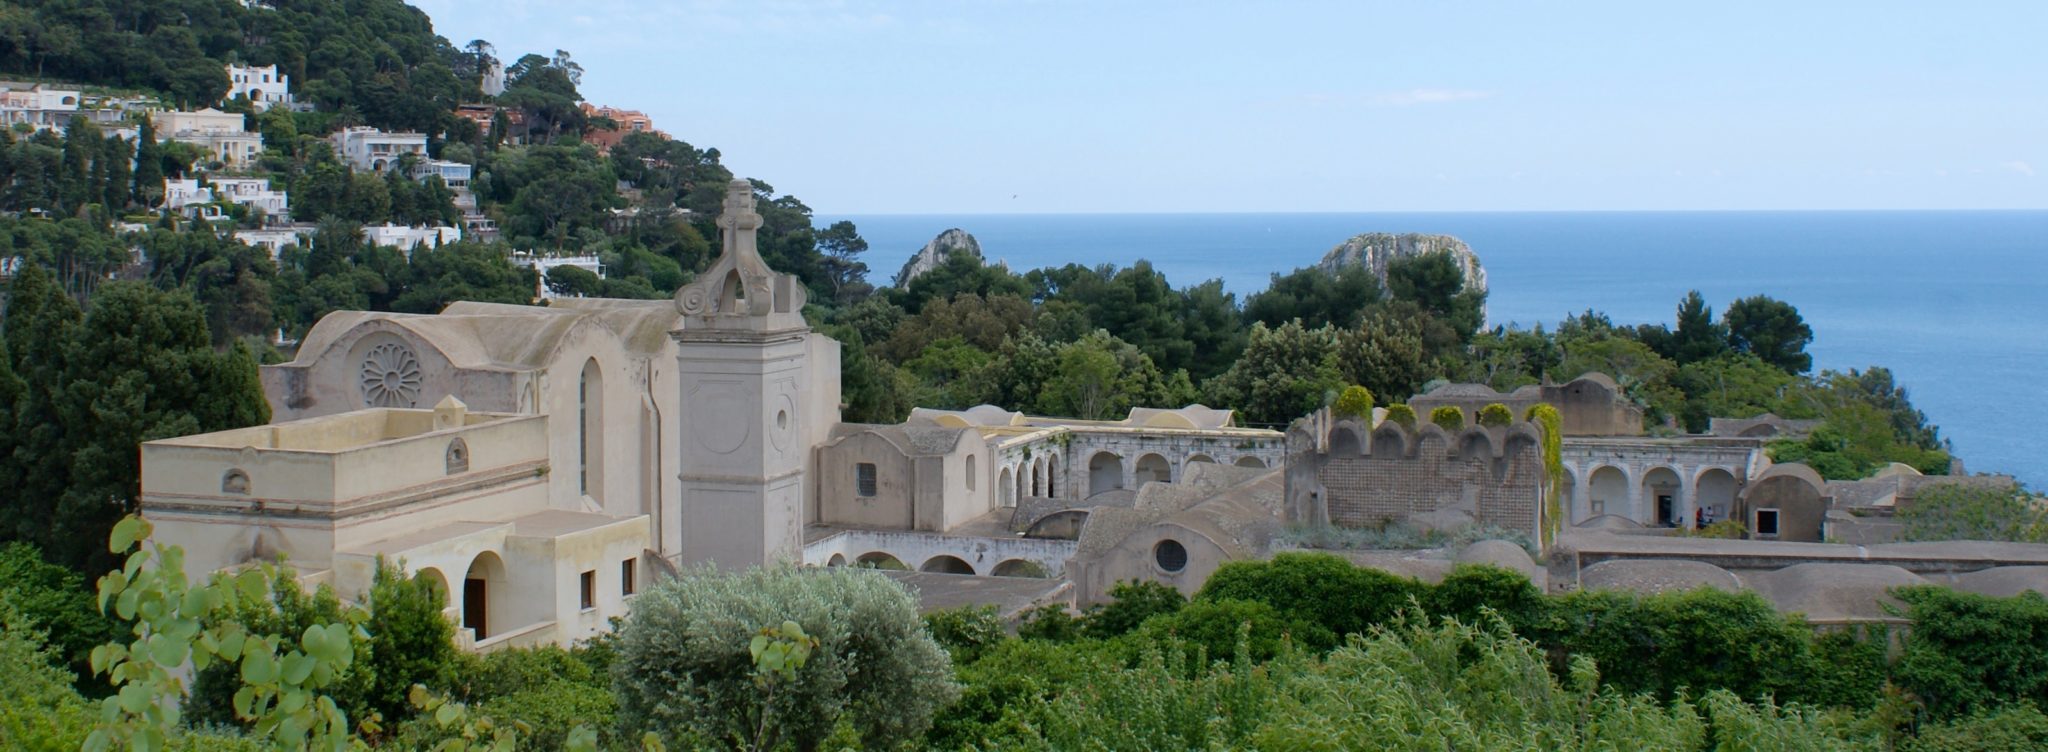 Certosa di San Giacomo, Capri